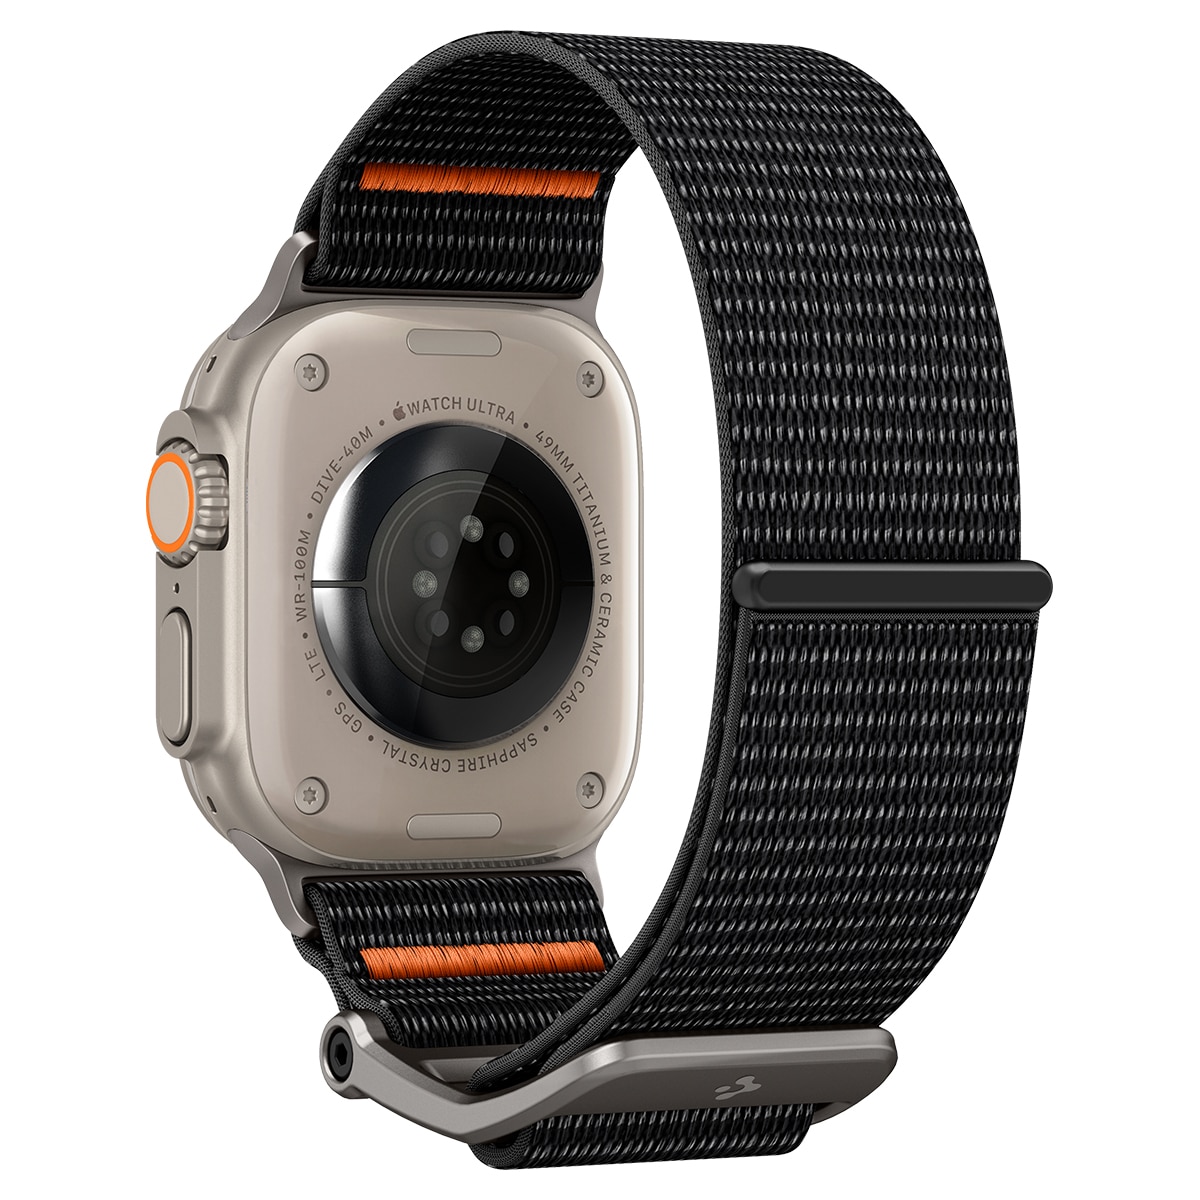 Apple Watch SE 44mm DuraPro Flex Ultra Black